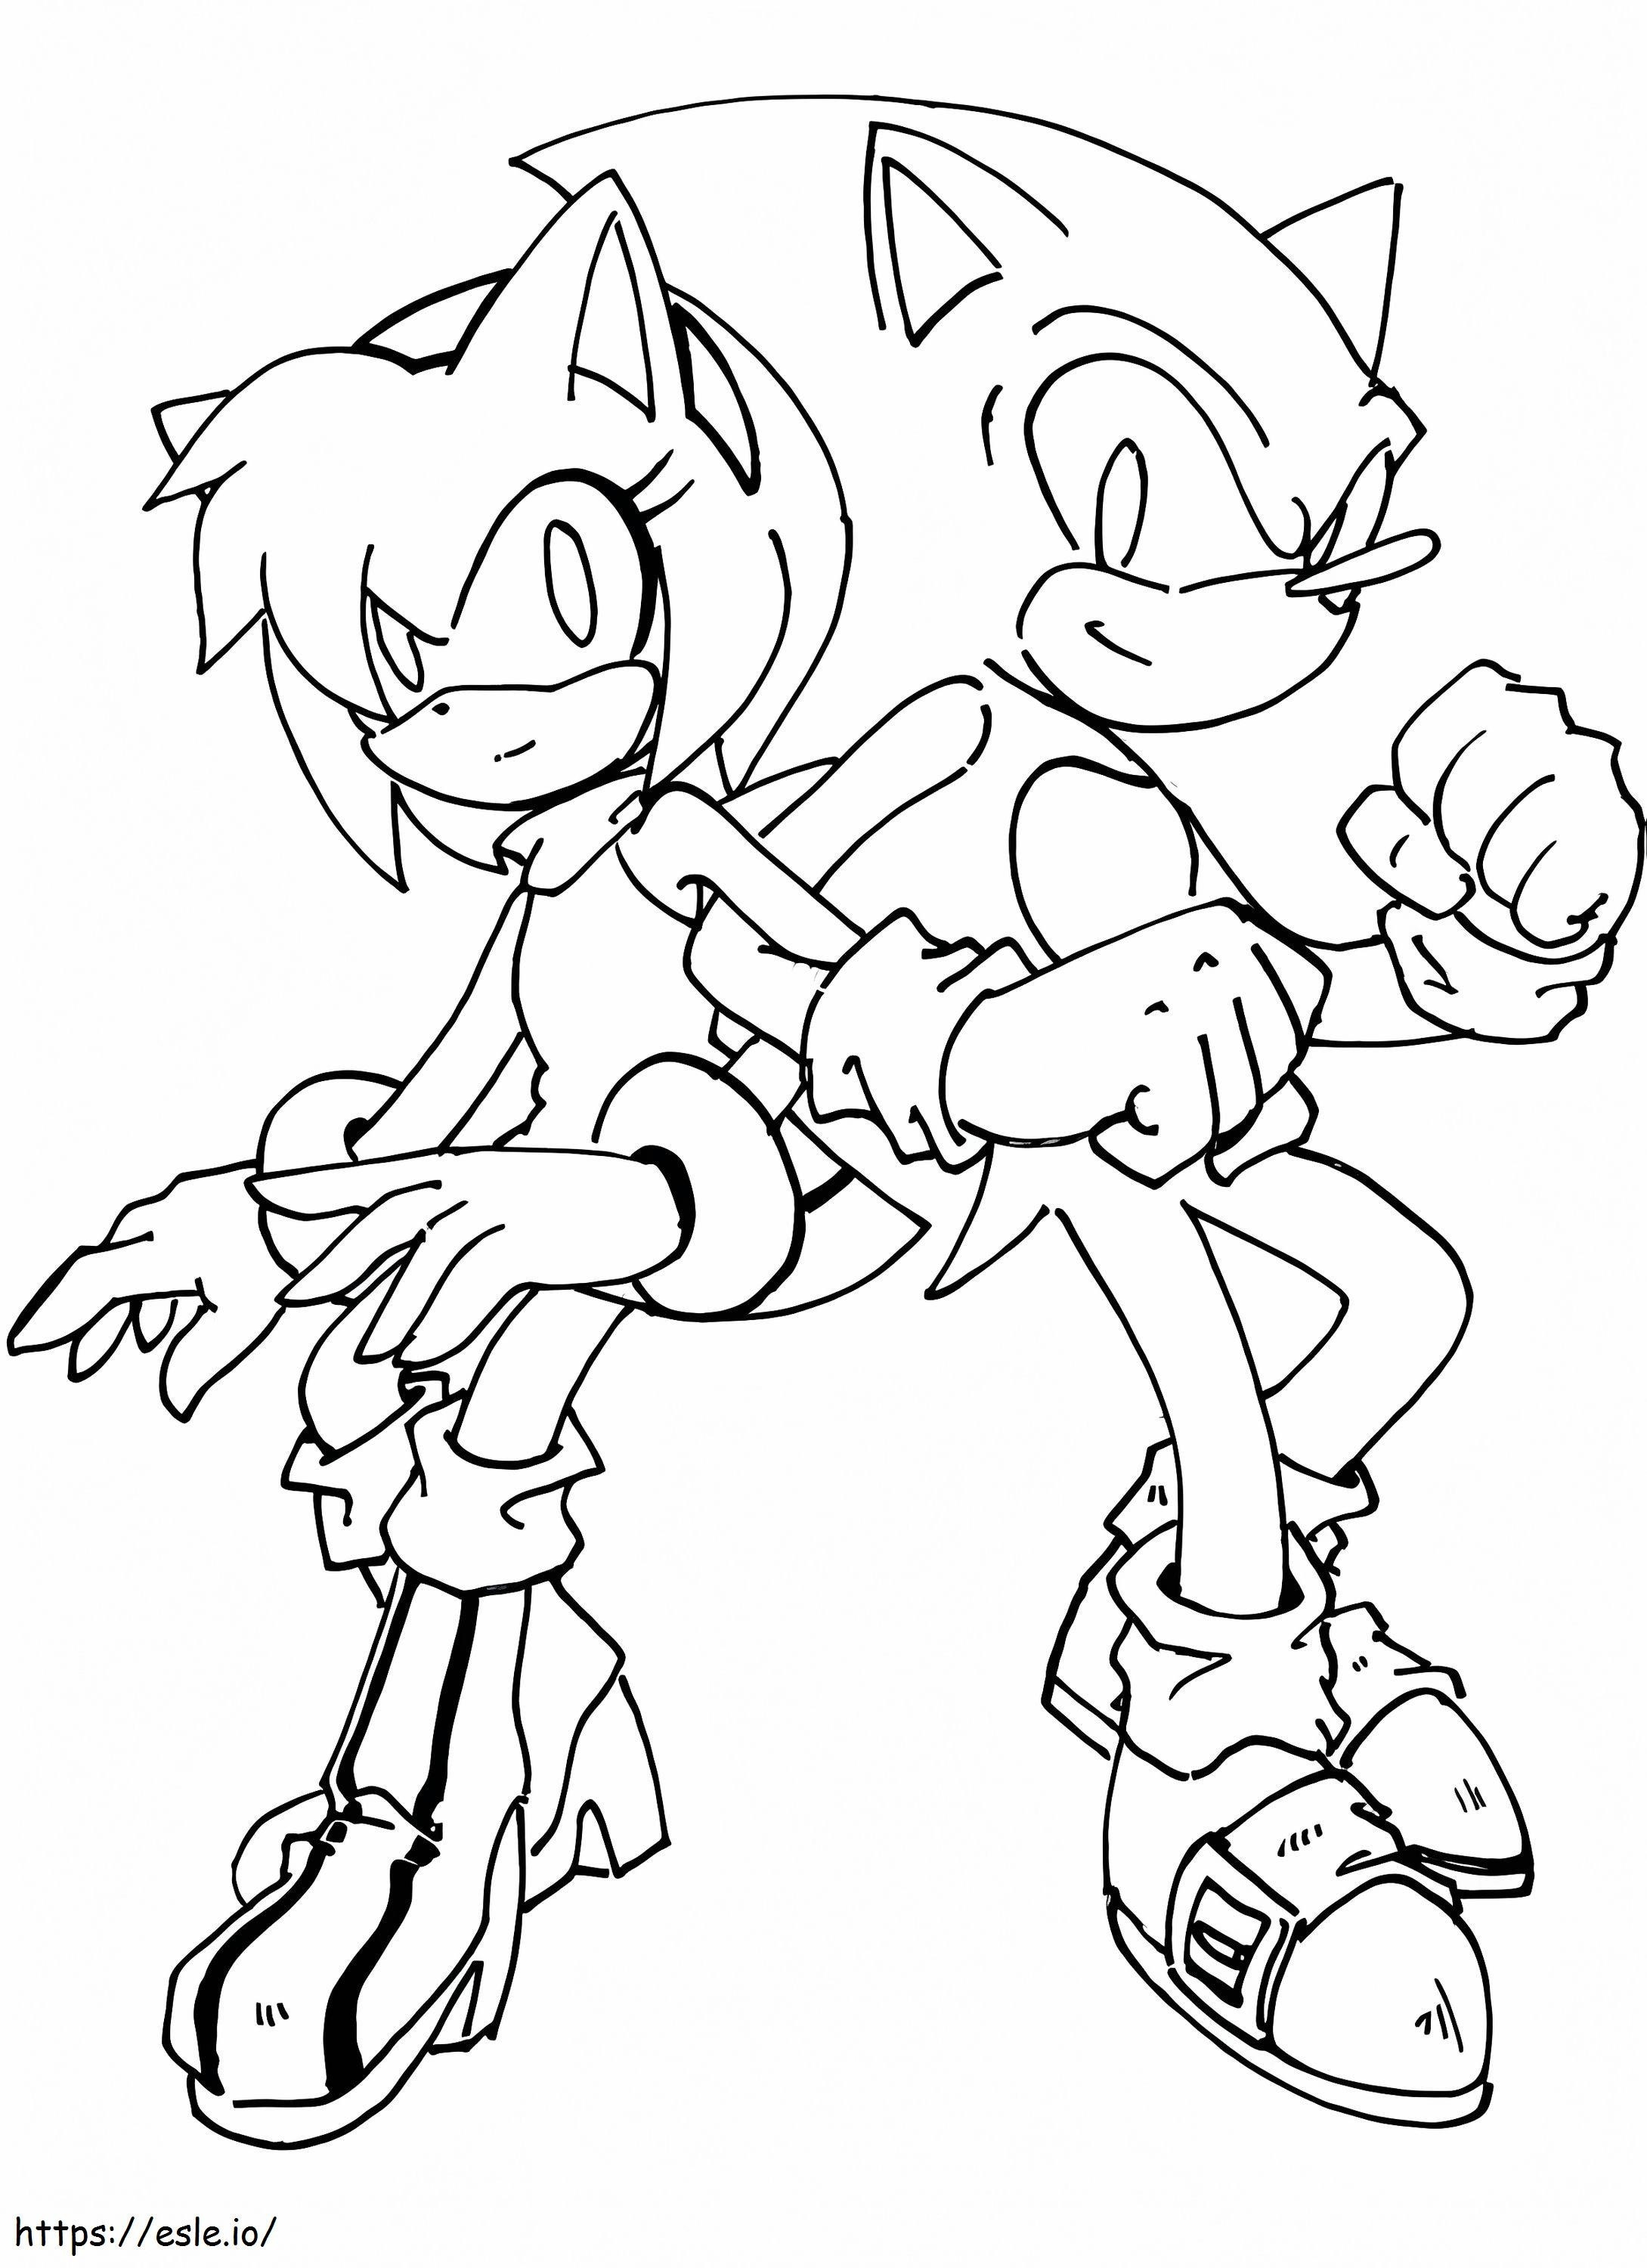 Sonic met Amy Rose kleurplaat kleurplaat